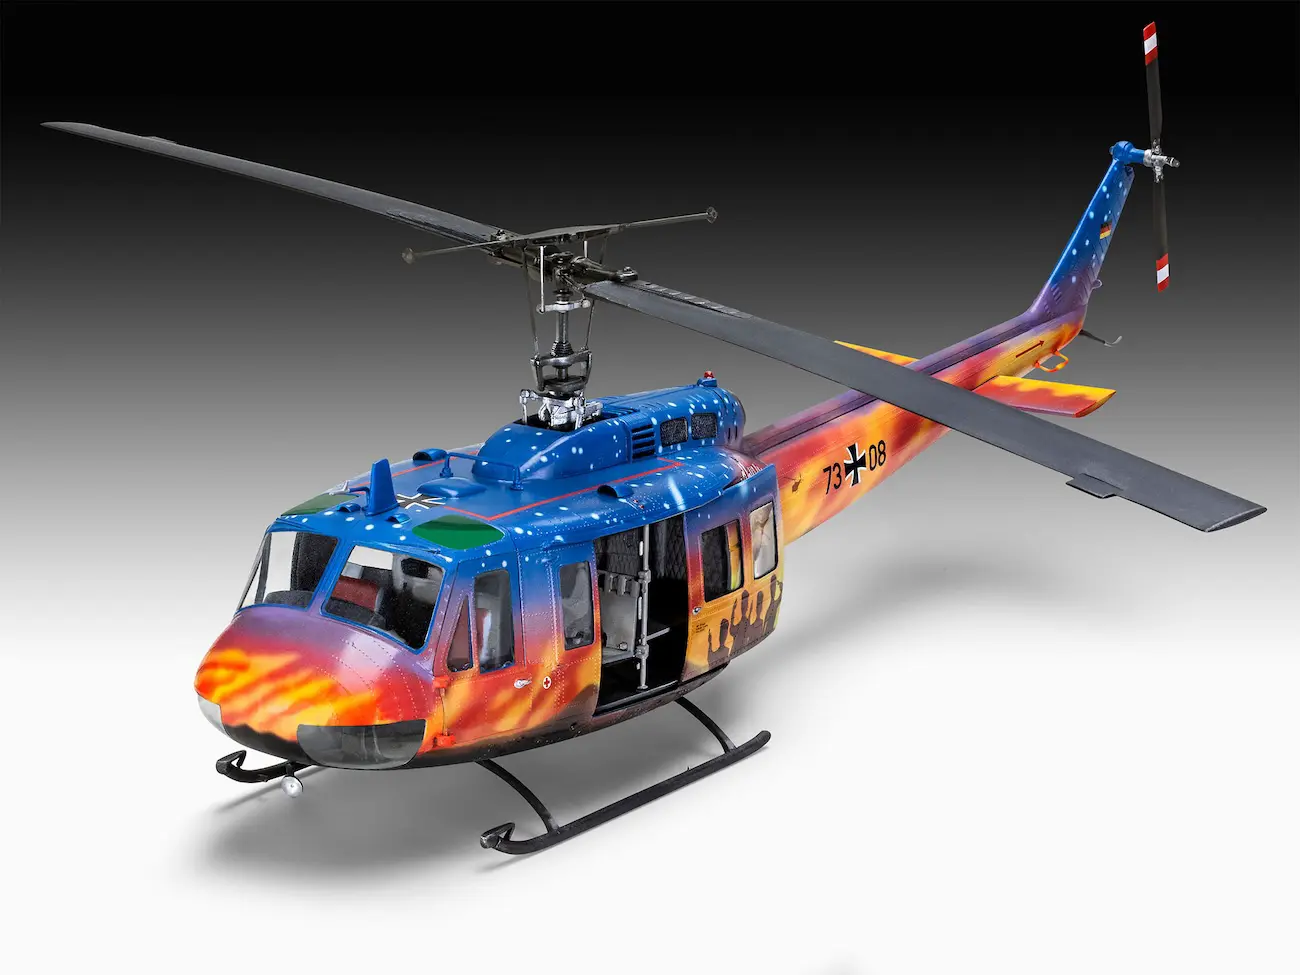 Revell 03867 - Bell UH-1D Goodbye Huey